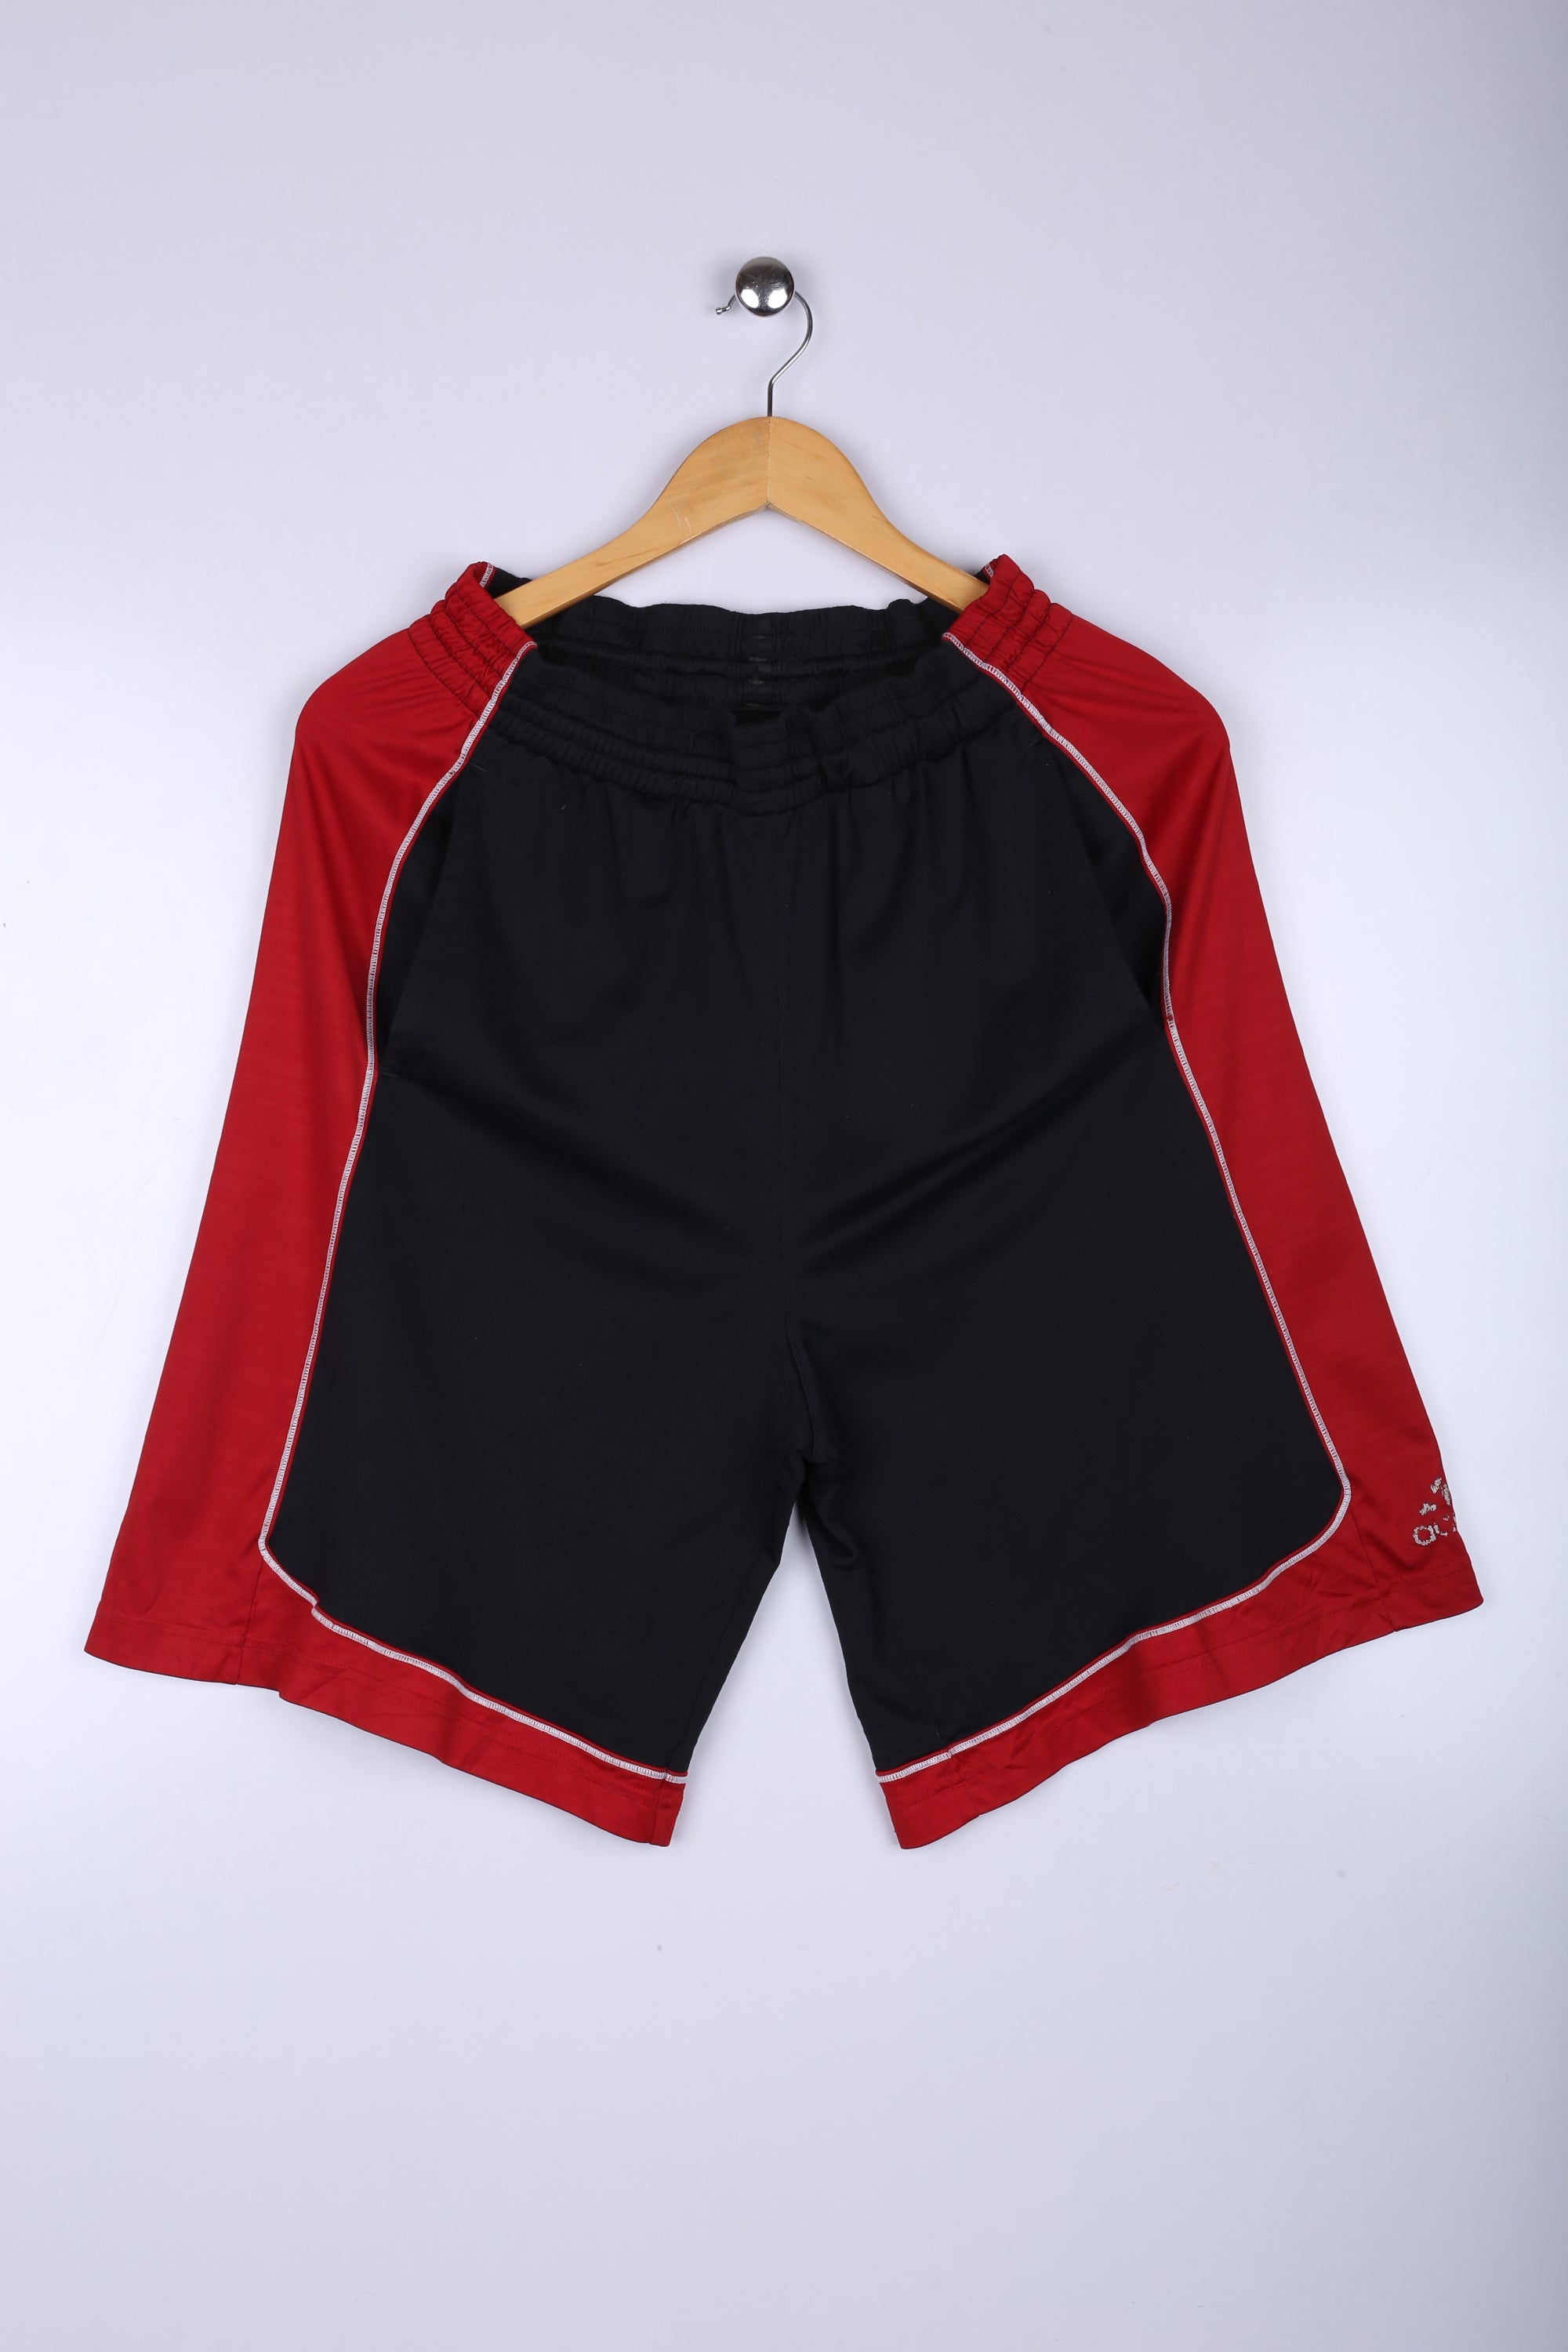 Vintage Adidas Shorts Black/Red